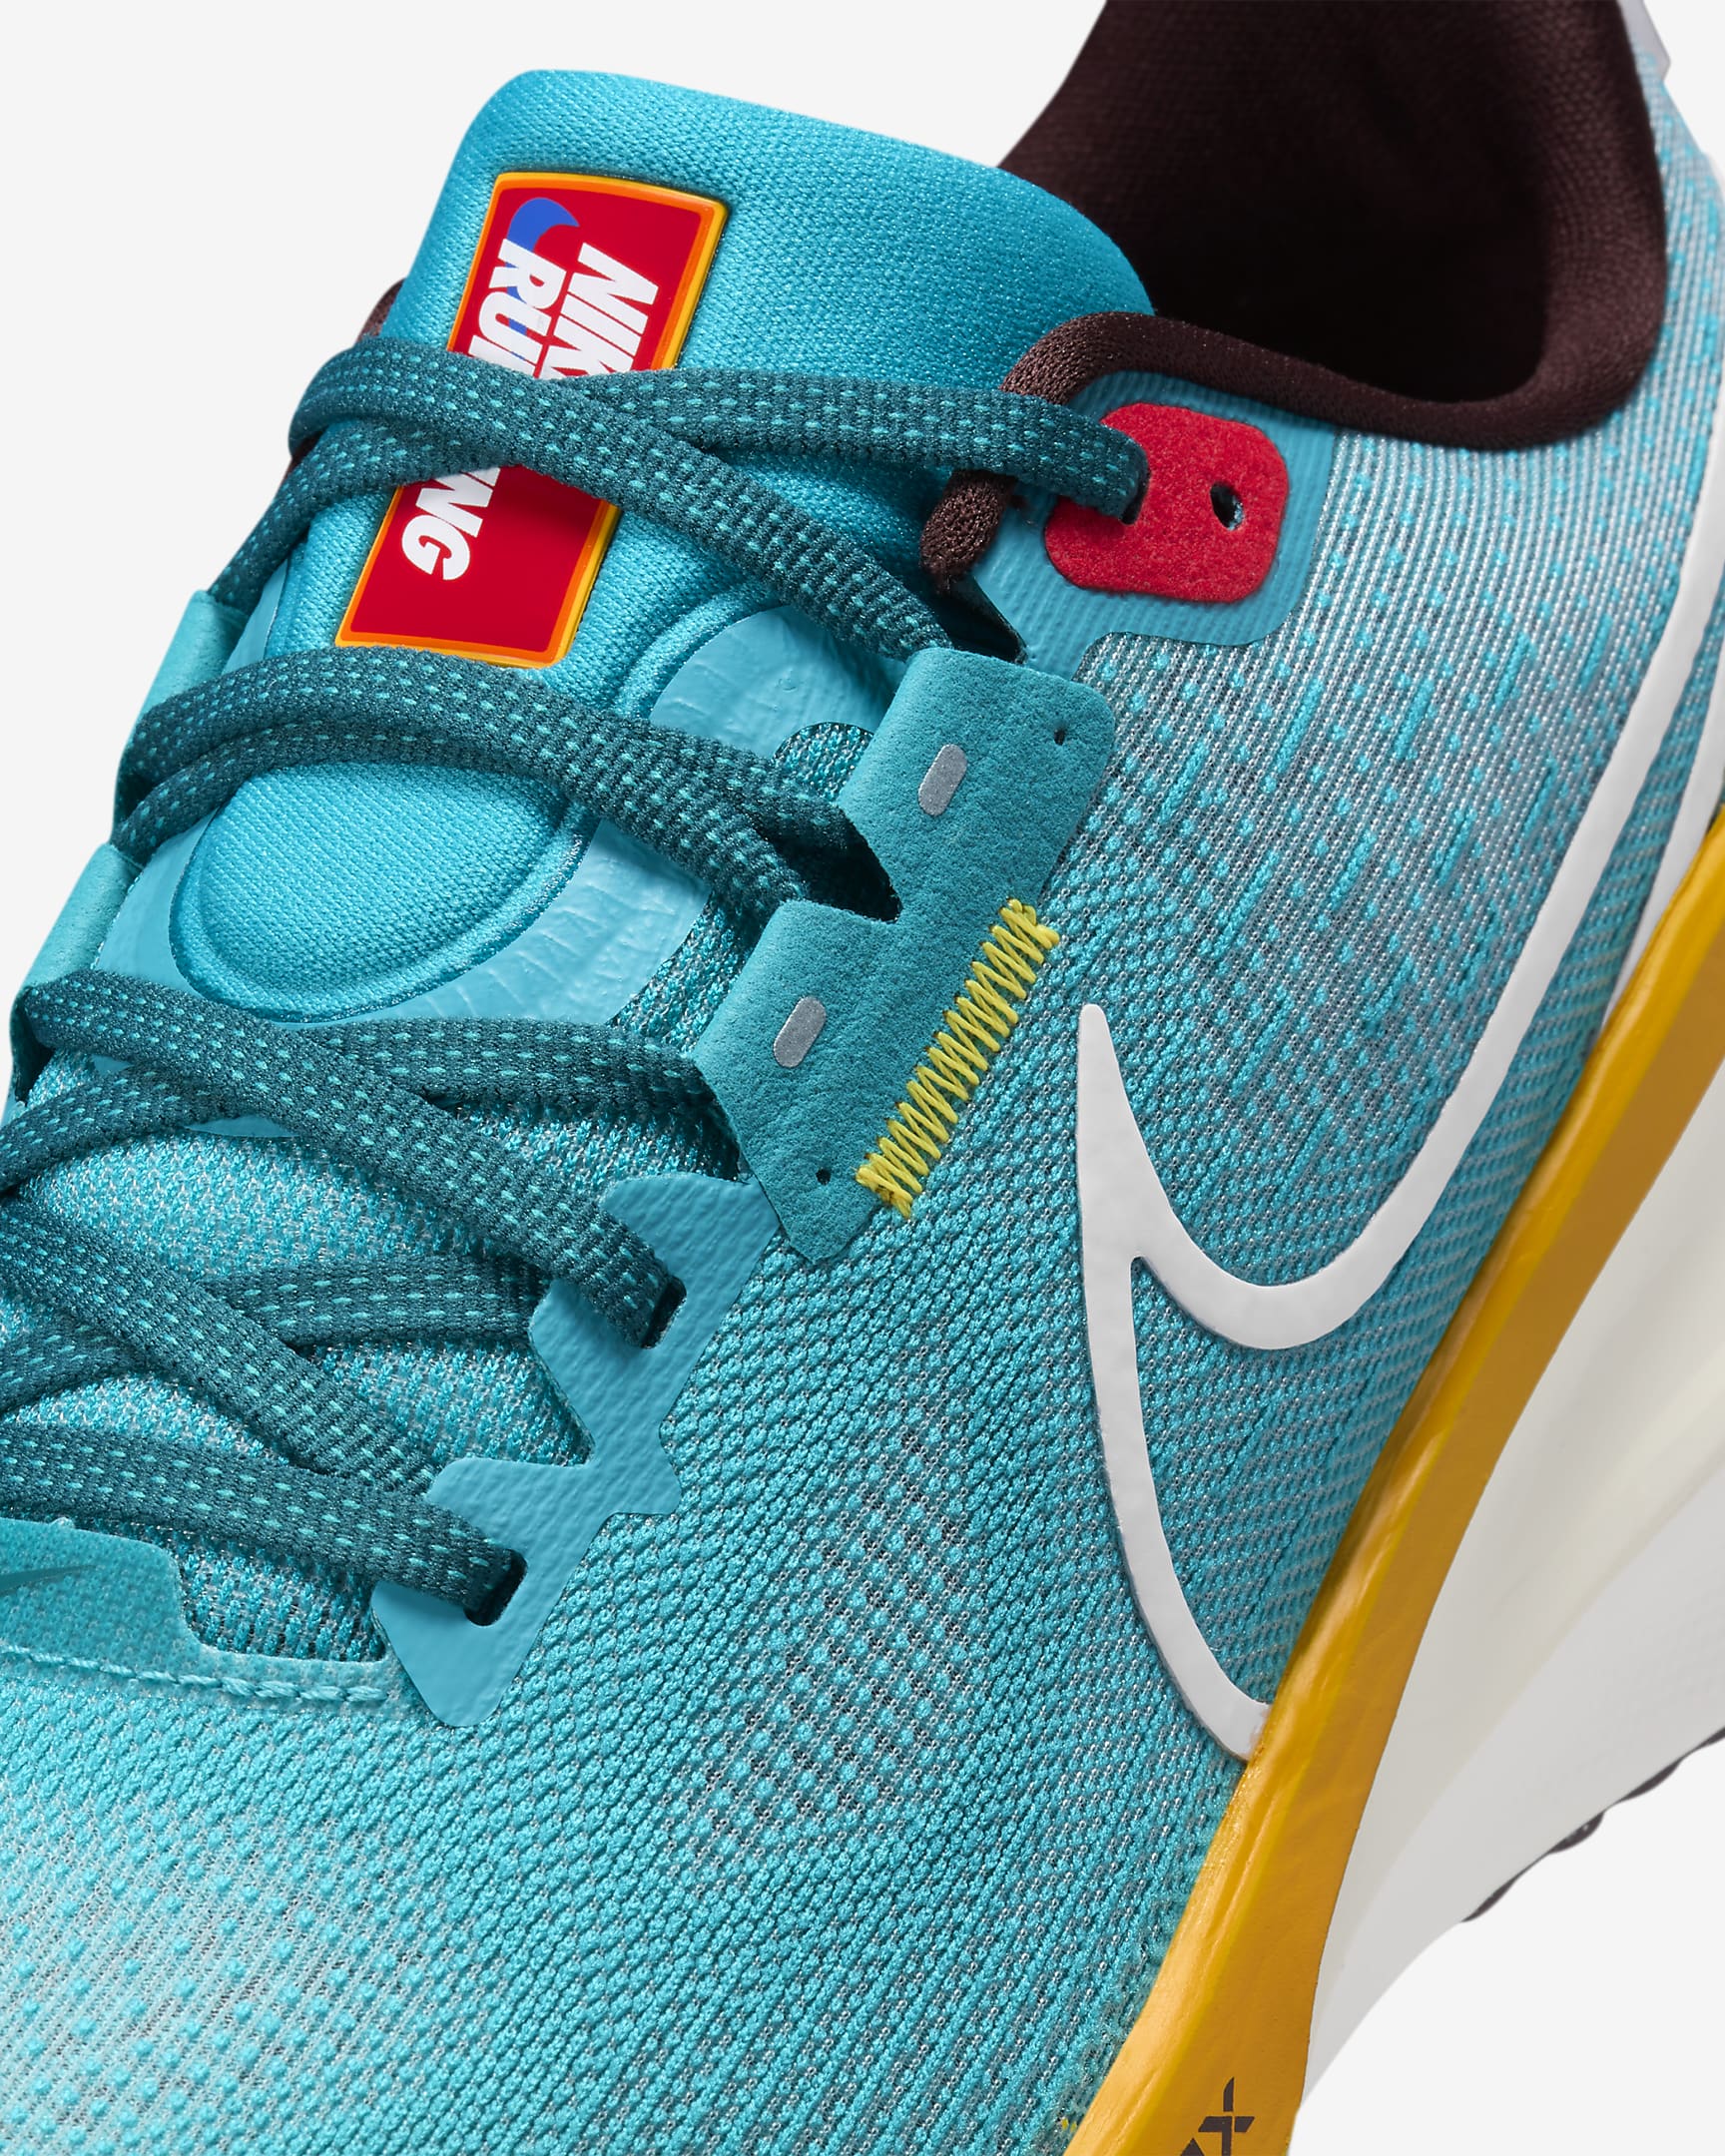 Giày Nike Vomero 17 PRM Men Road Running Shoes #Teal Nebula - Kallos Vietnam